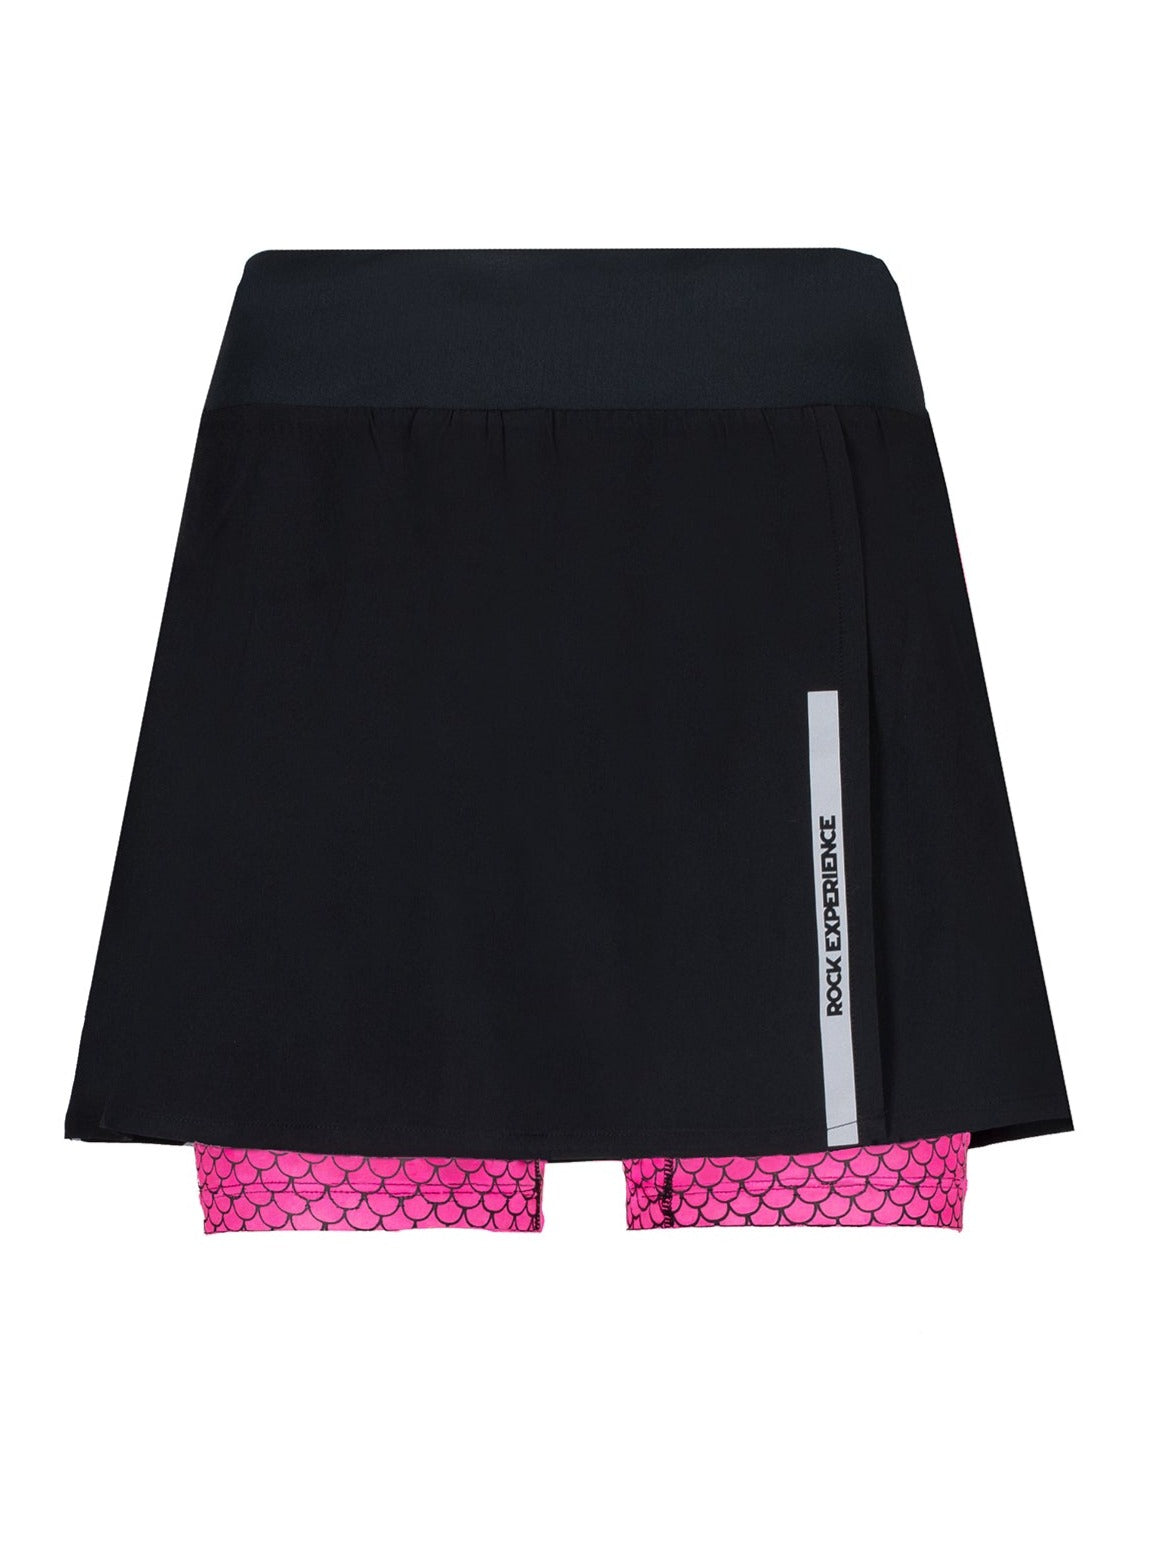 Izumi P. Woman Skirt